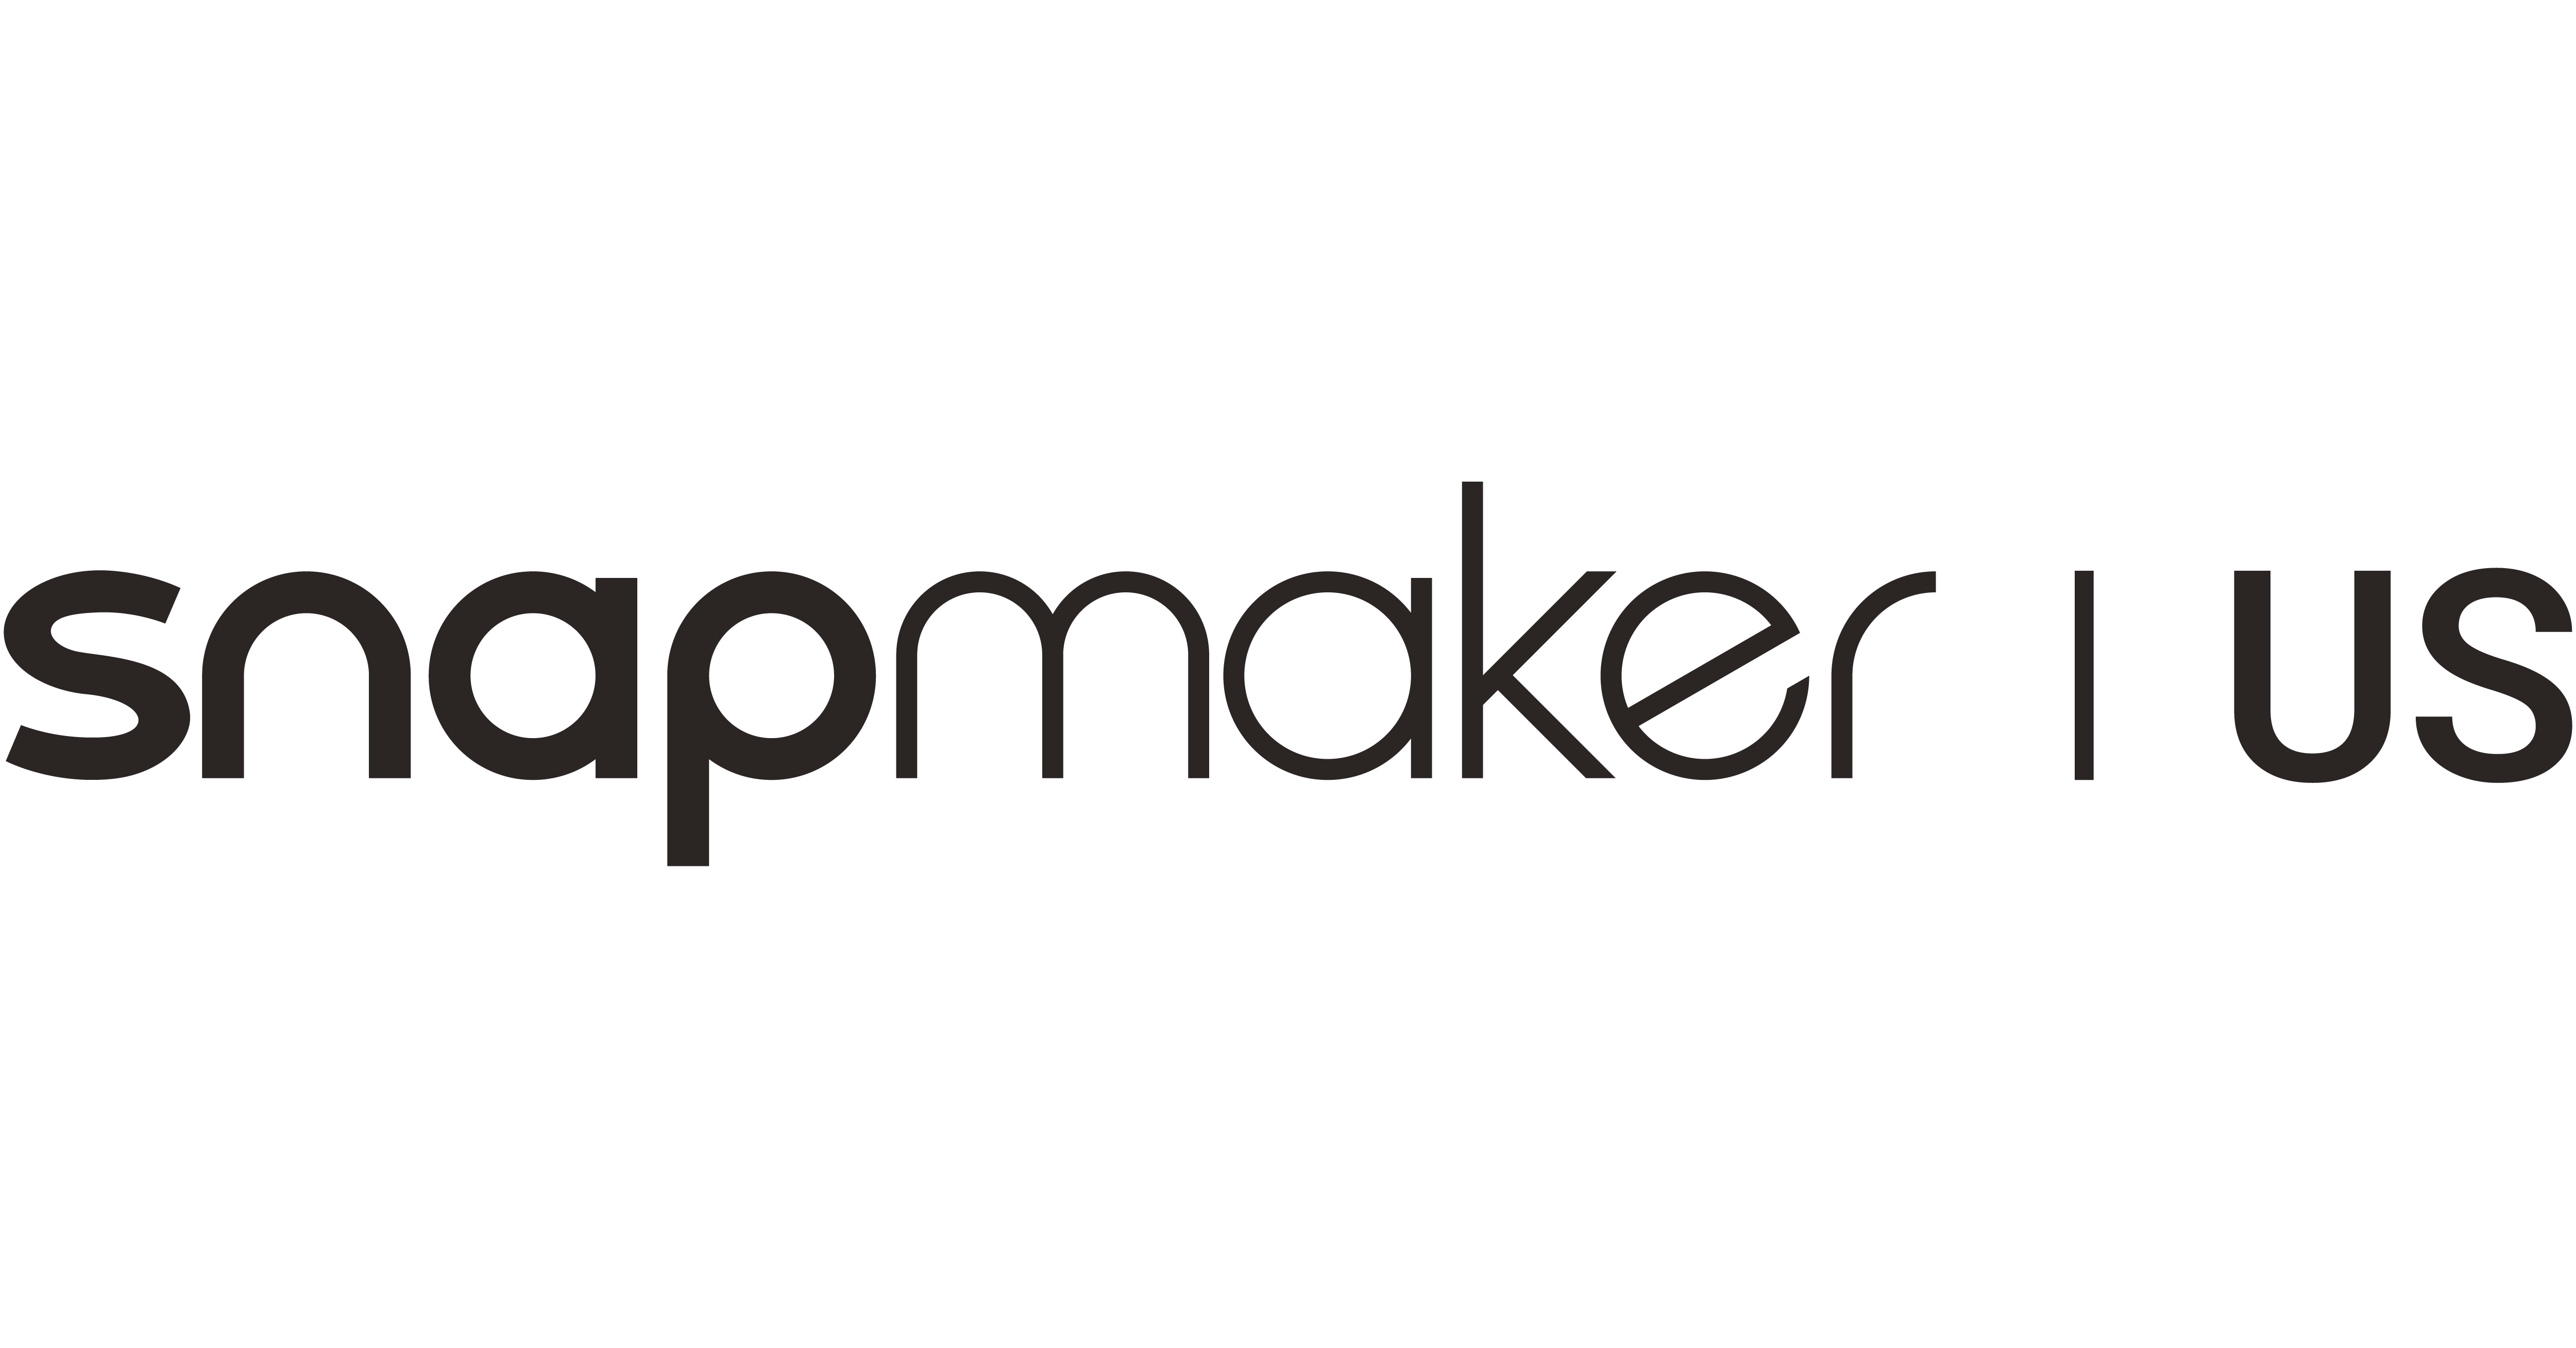 Snapmaker Online Store | 3D Printers, Laser Engravers, CNC Carvers
– Snapmaker US
